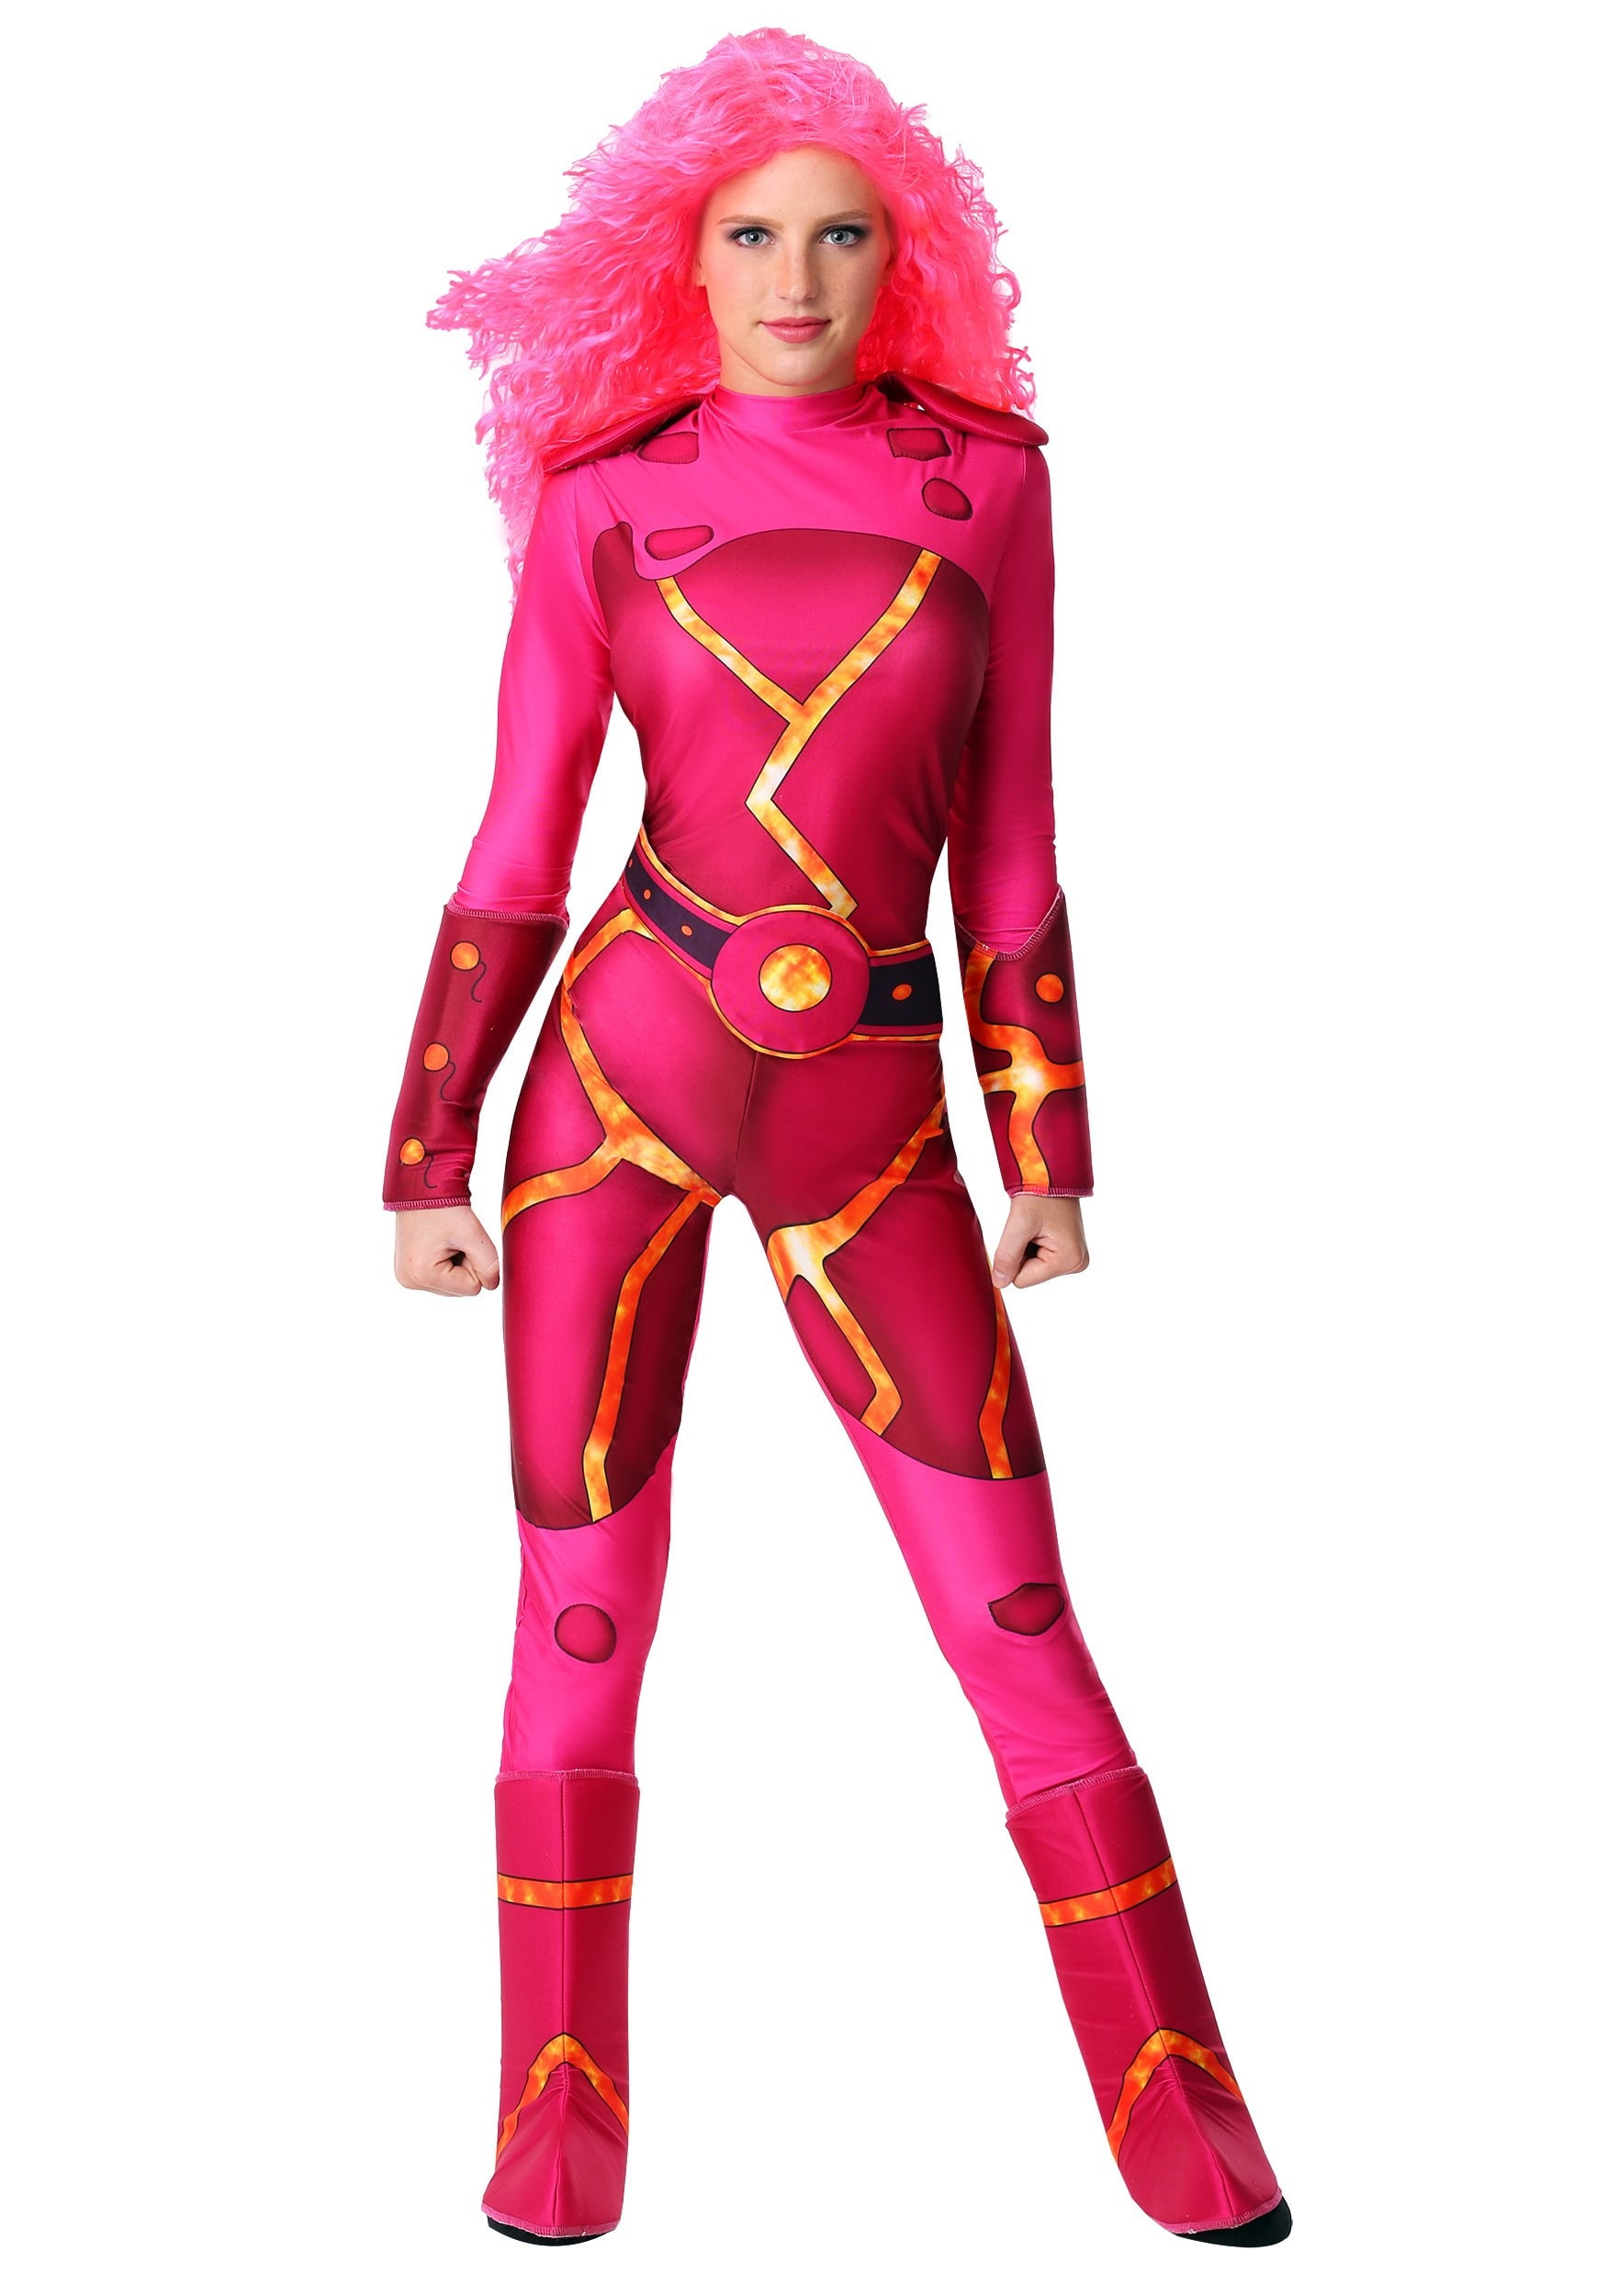 Lava Girl Costume for Adults - Walmart.com.